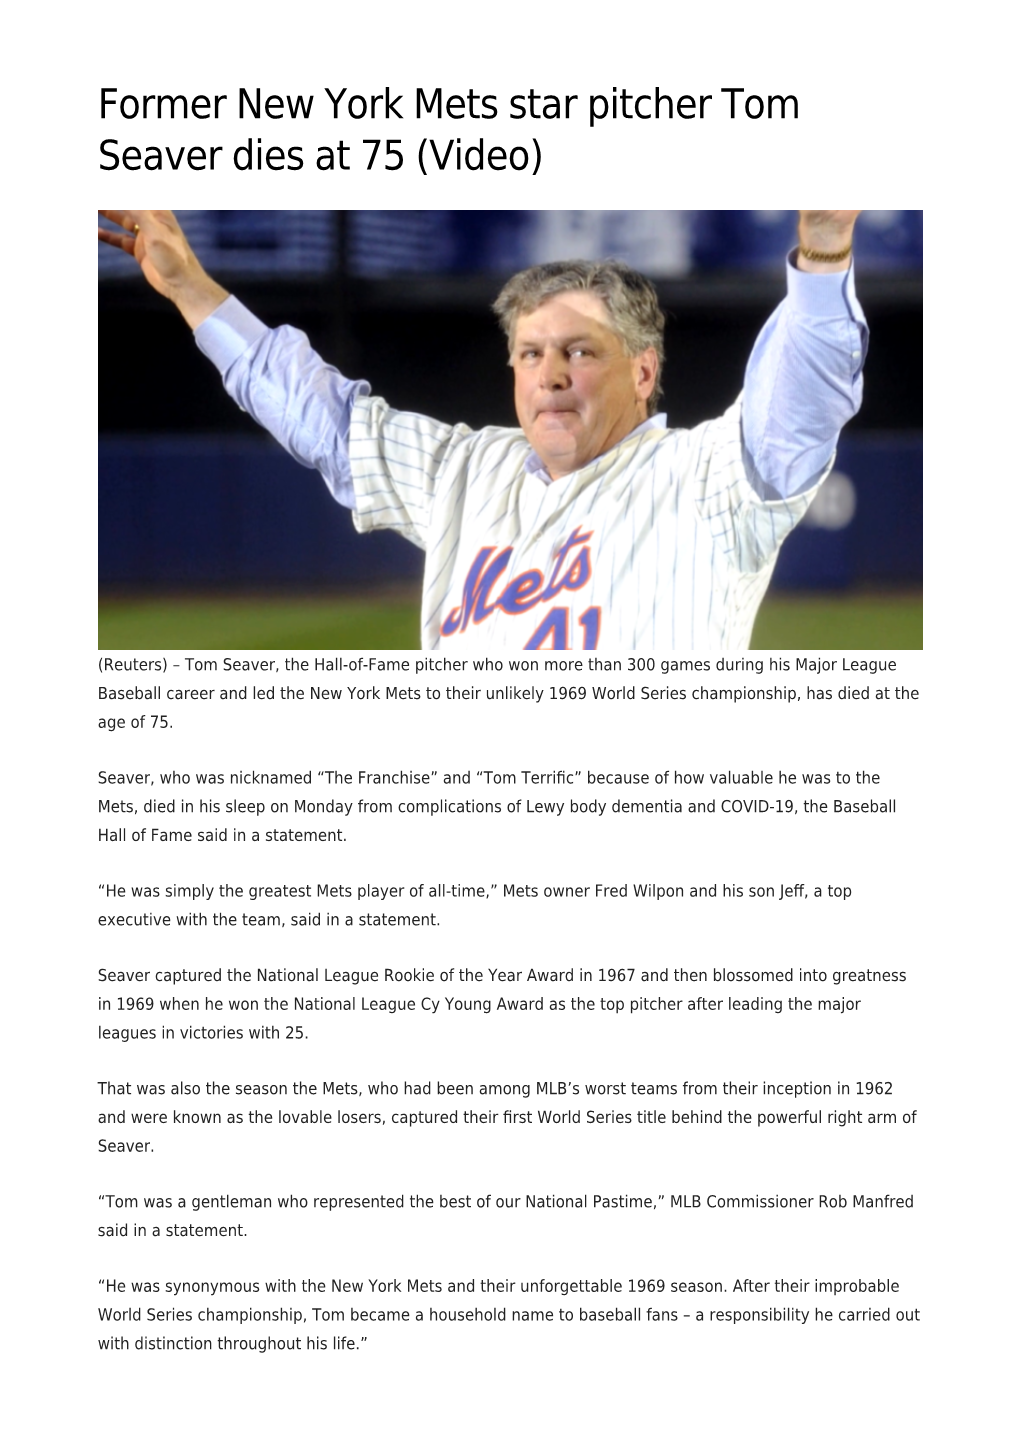 Former New York Mets Star Pitcher Tom Seaver Dies at 75 (Video)